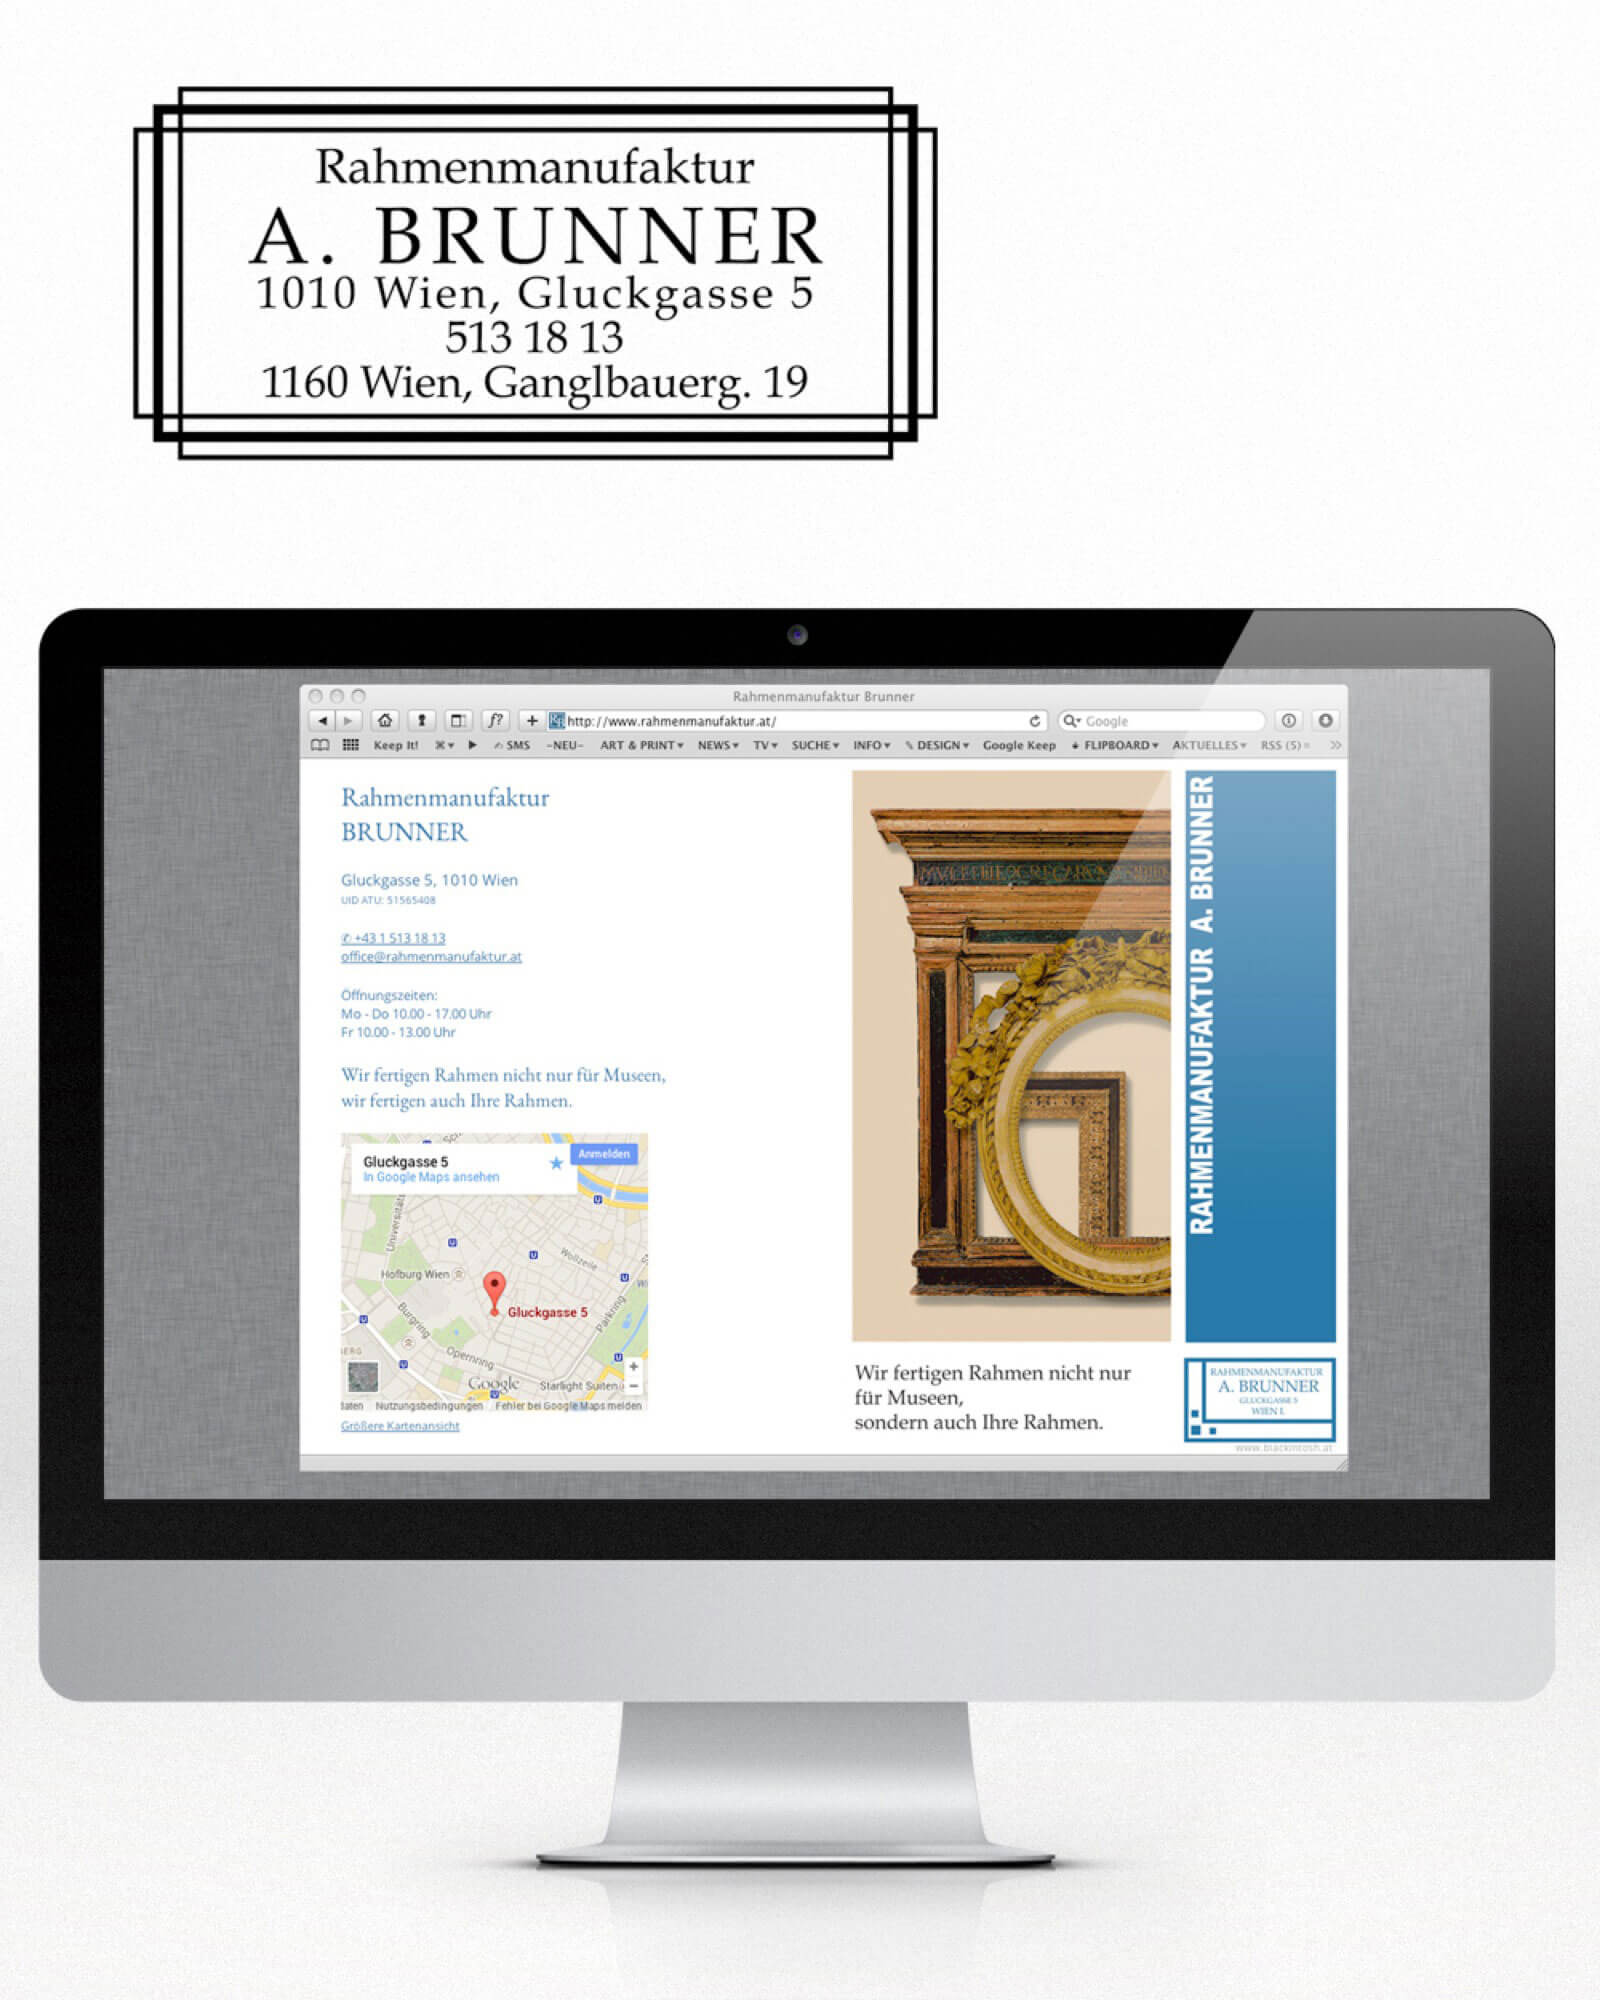 Rahmenmanufaktur Brunner, Wien I: CI, Inserate, Flyer, Webdesign